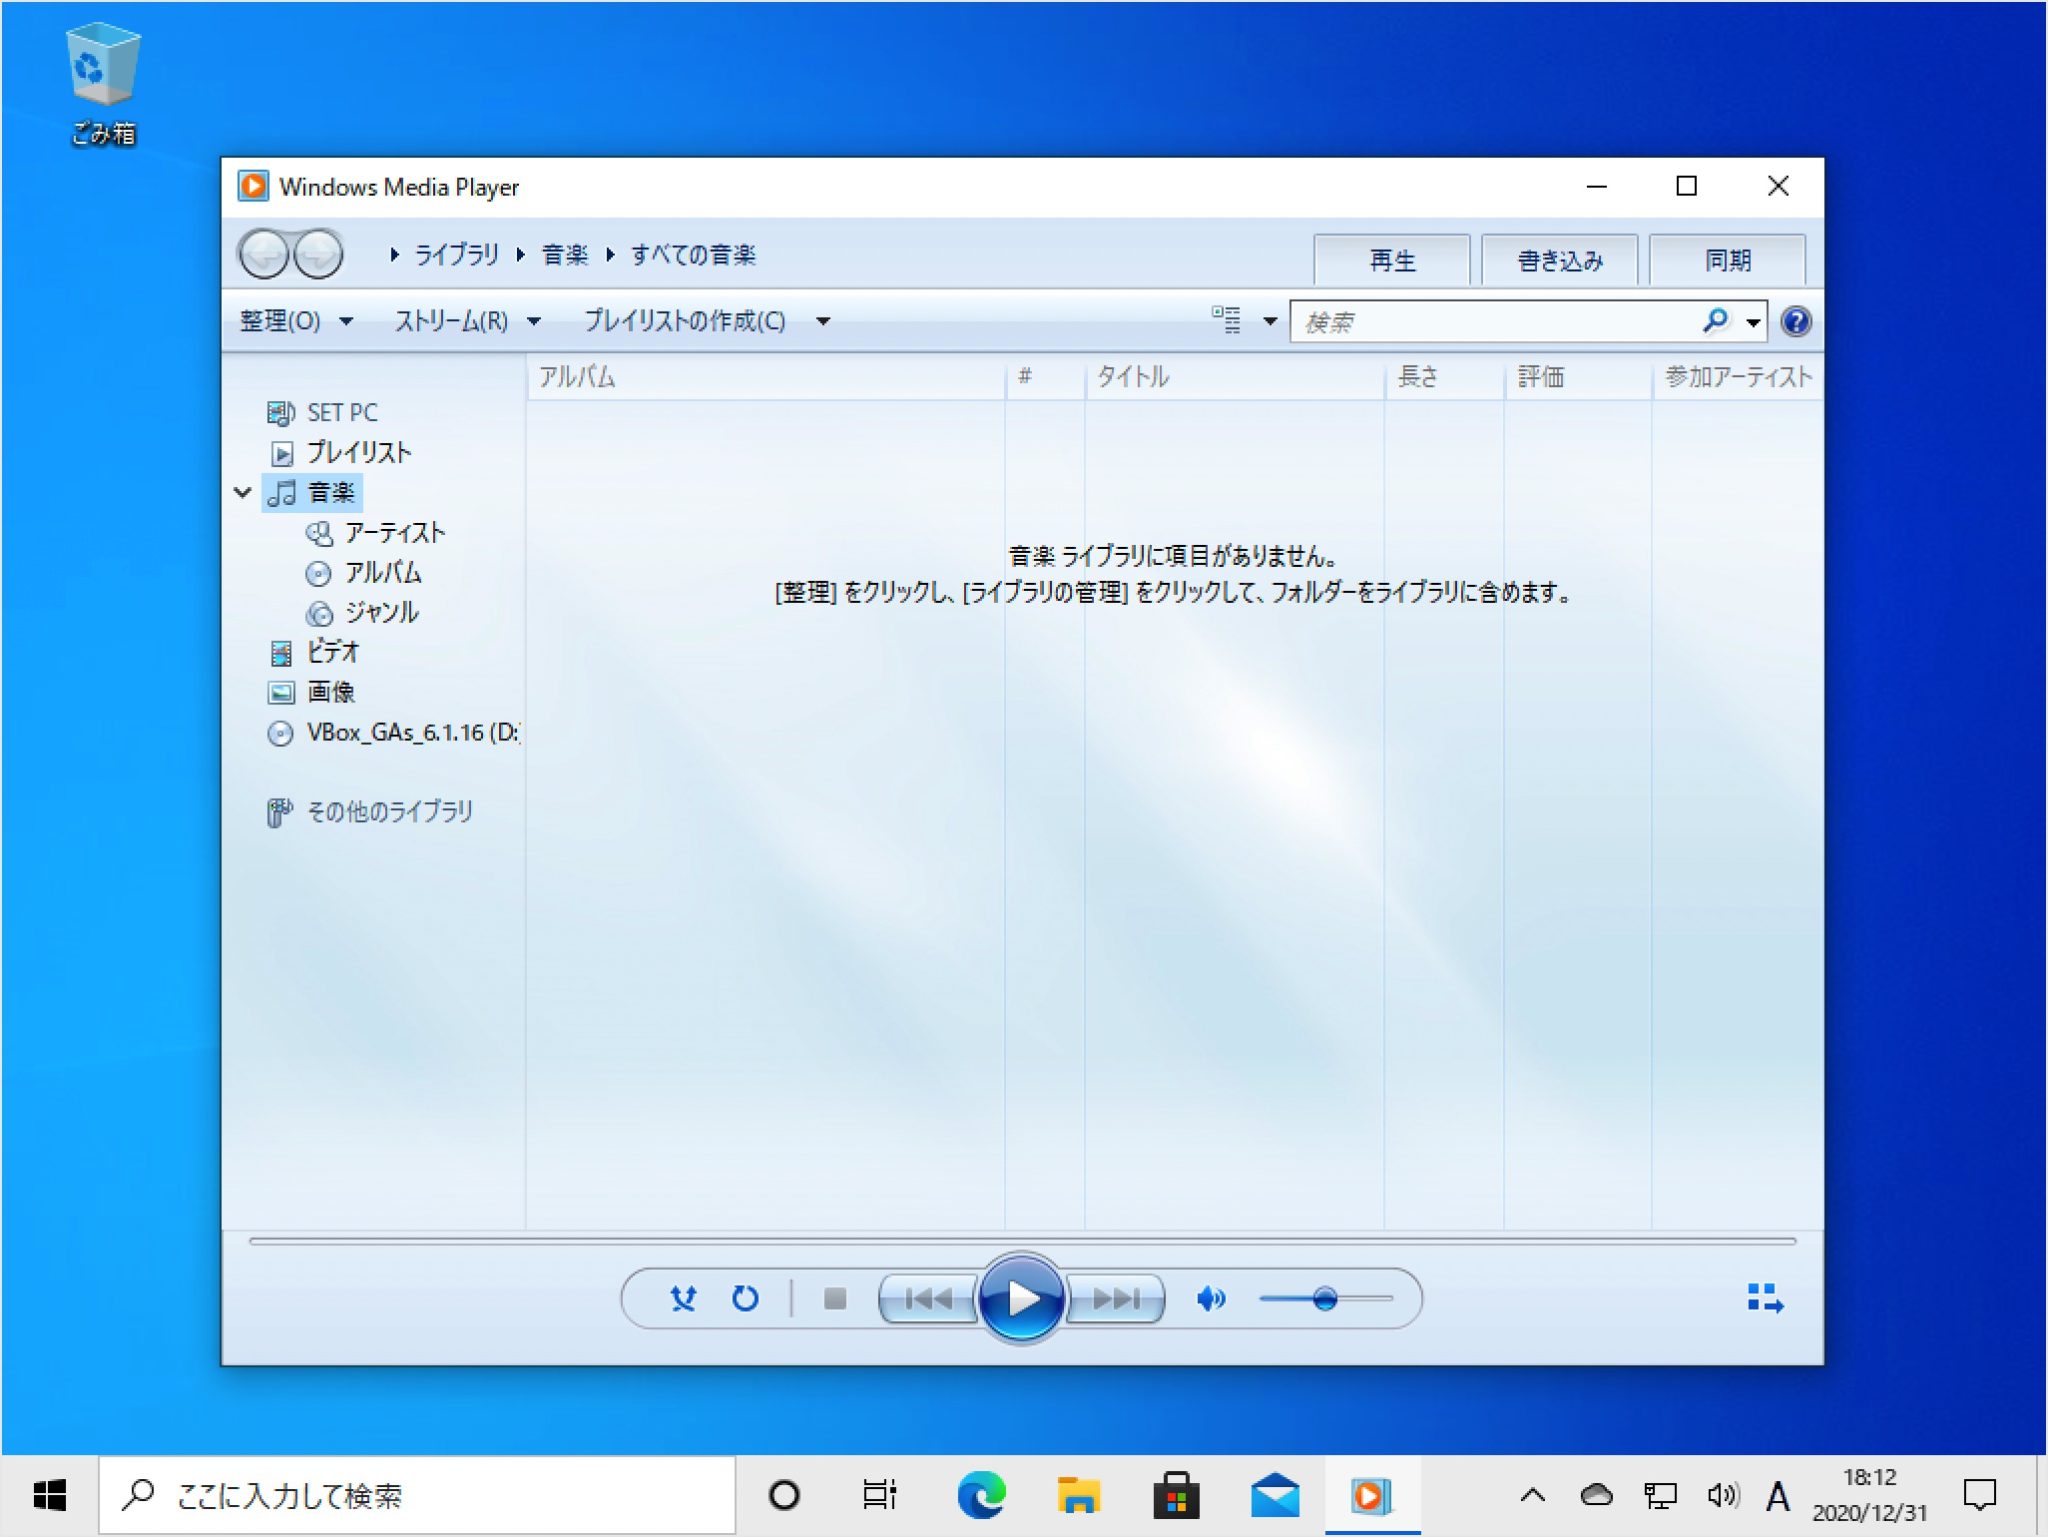 windows media player 10 free download